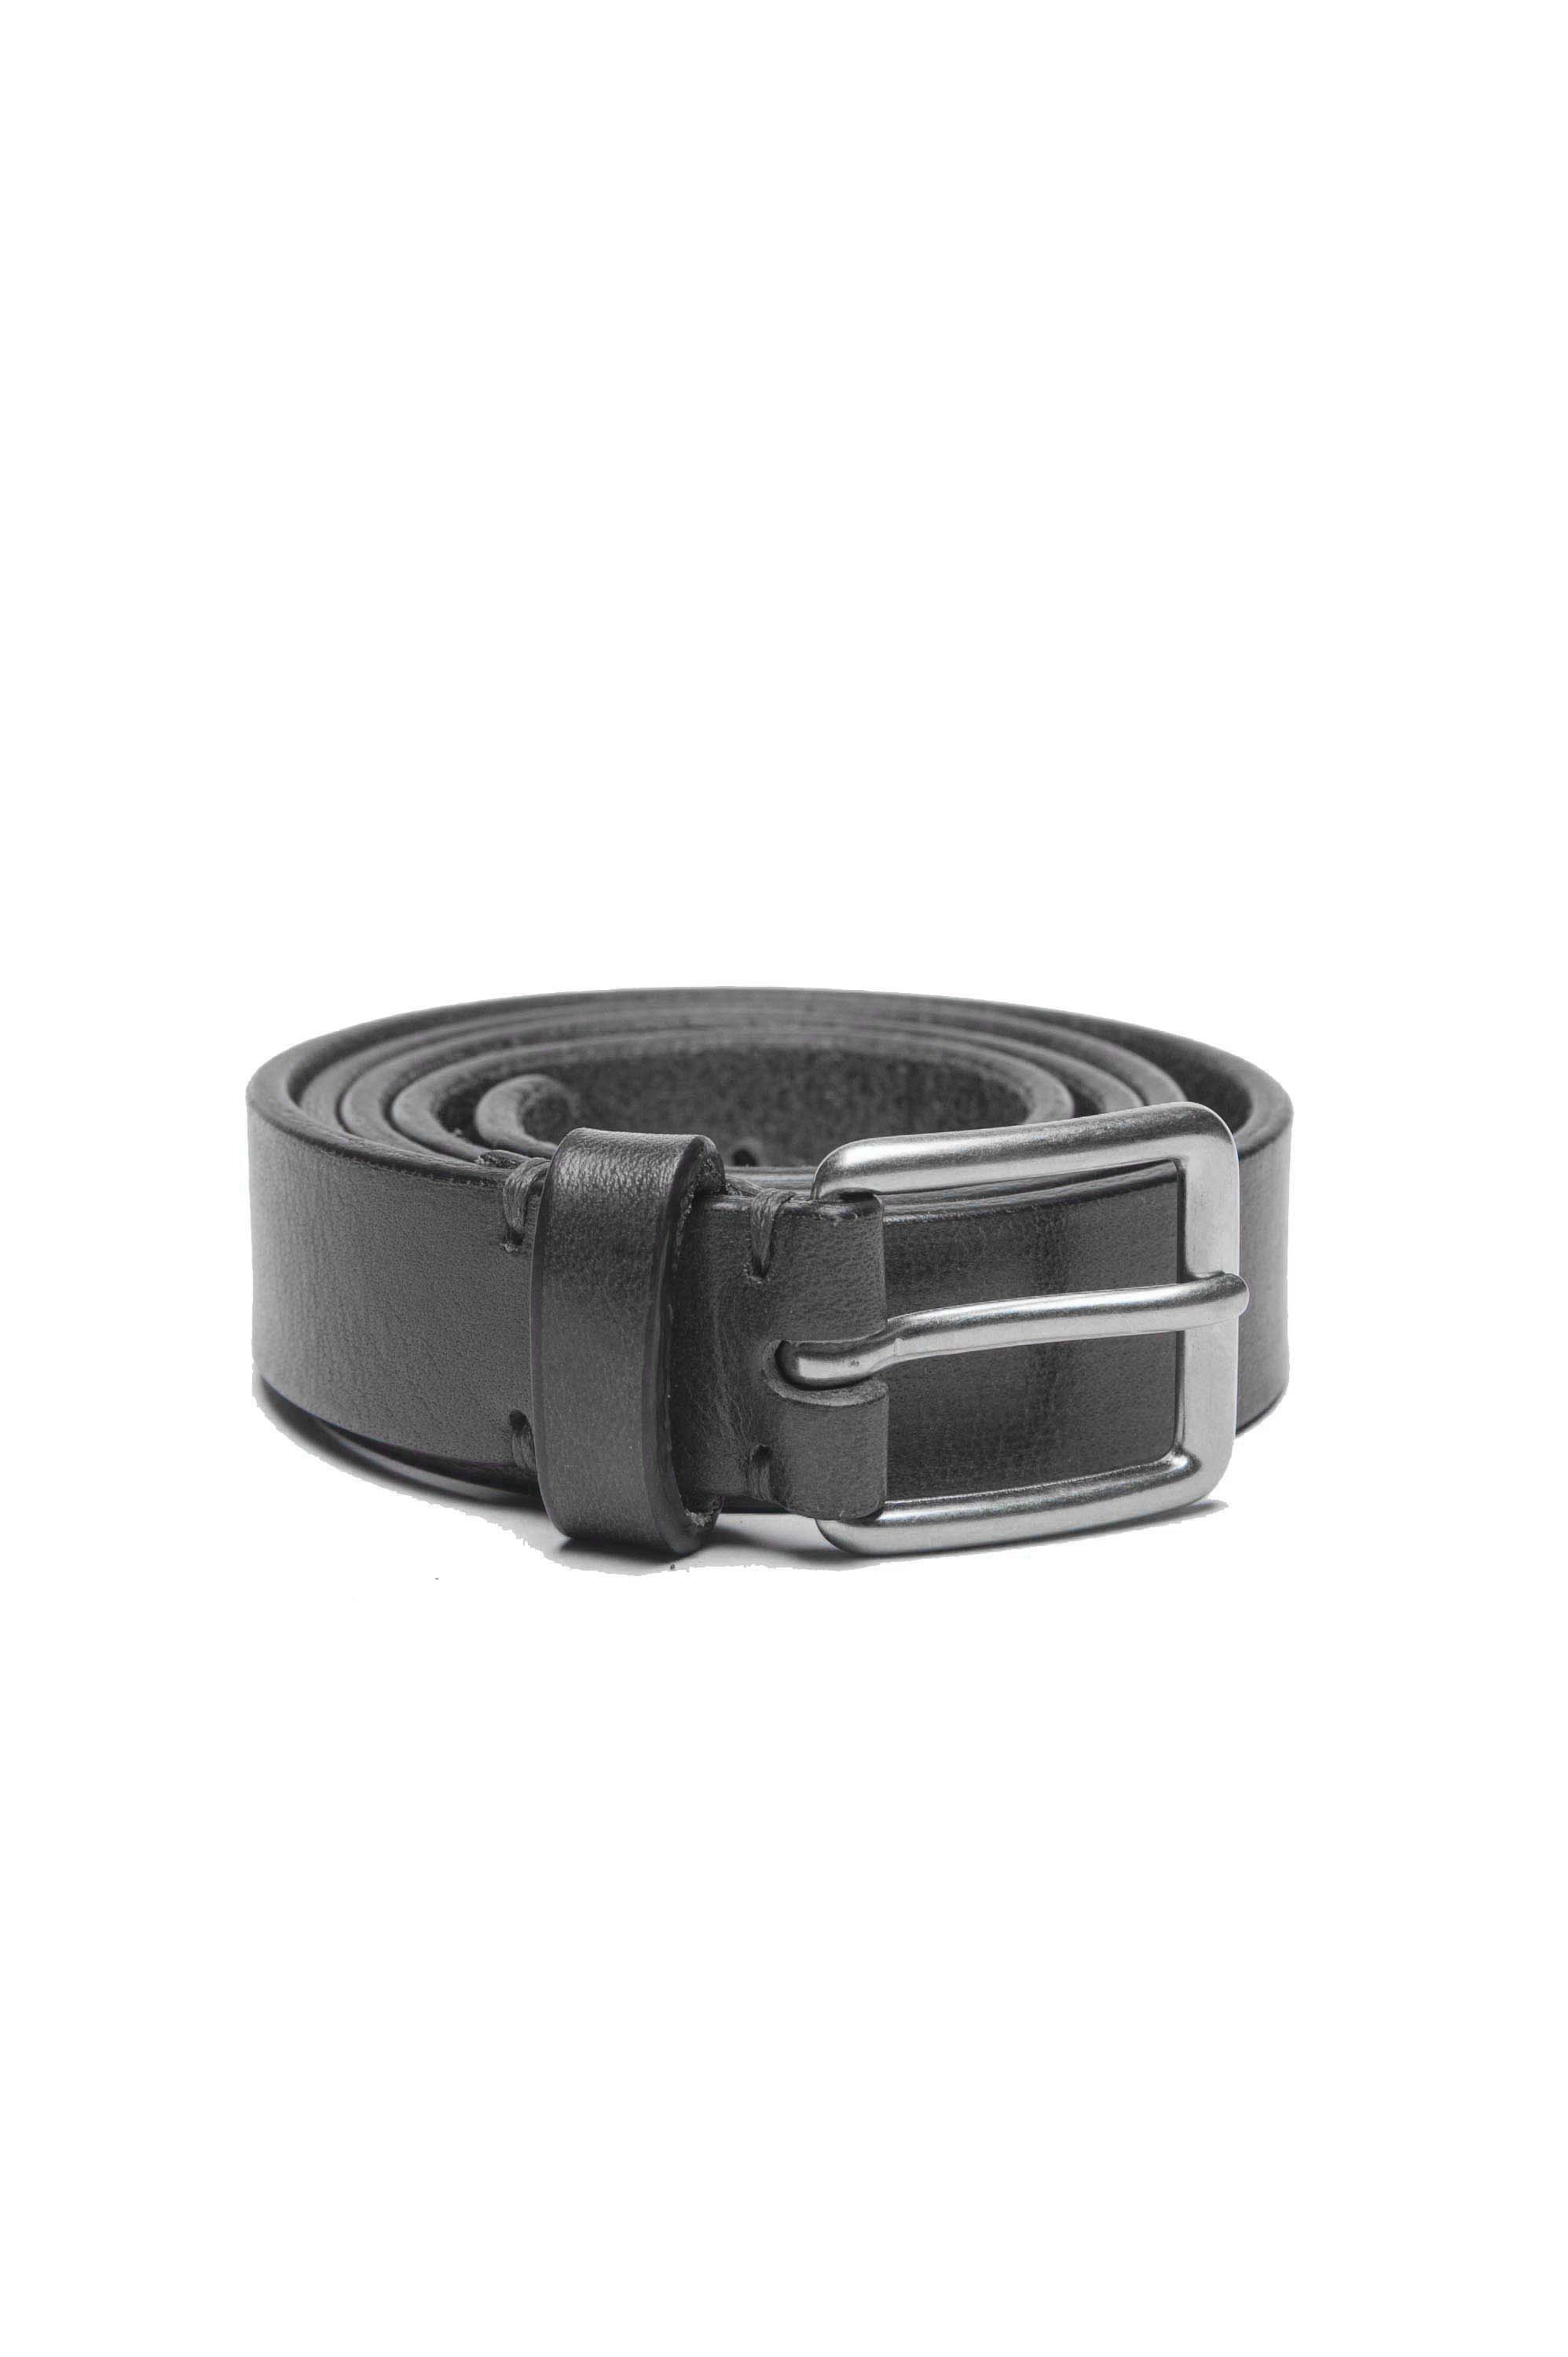 SBU 01250_19AW Classic belt in black calfskin leather 0.9 inches 01